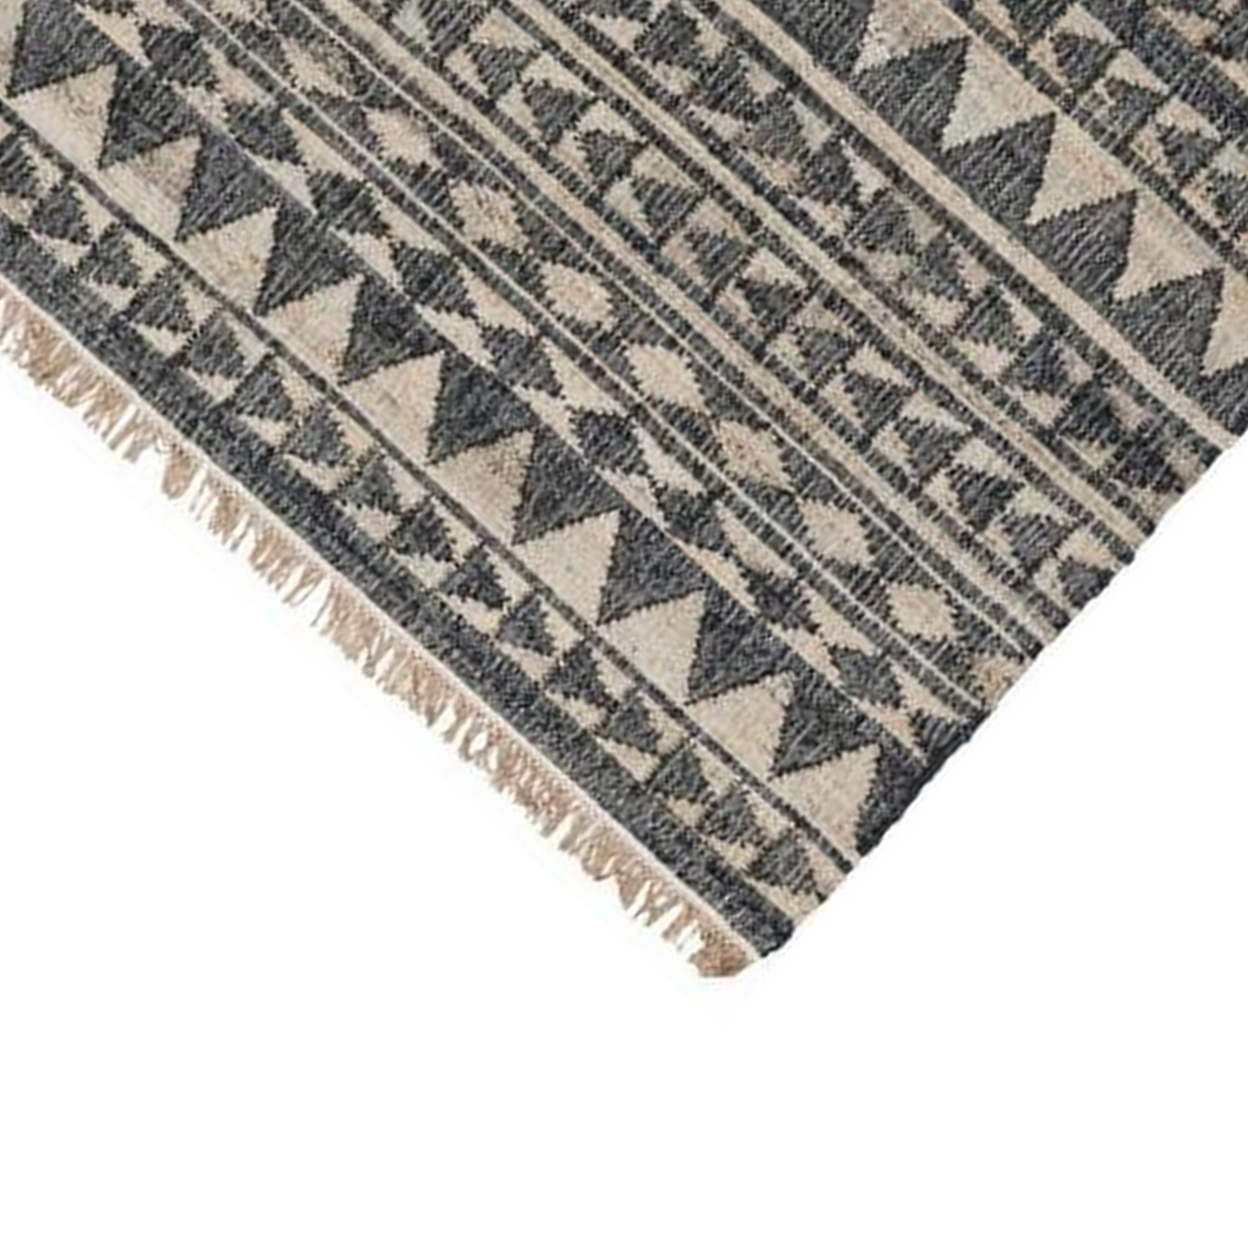 Moly 3 X 8 Tassel Area Rug, Tribal Triangle Pattern, Black Handwoven Jute - Saltoro Sherpi